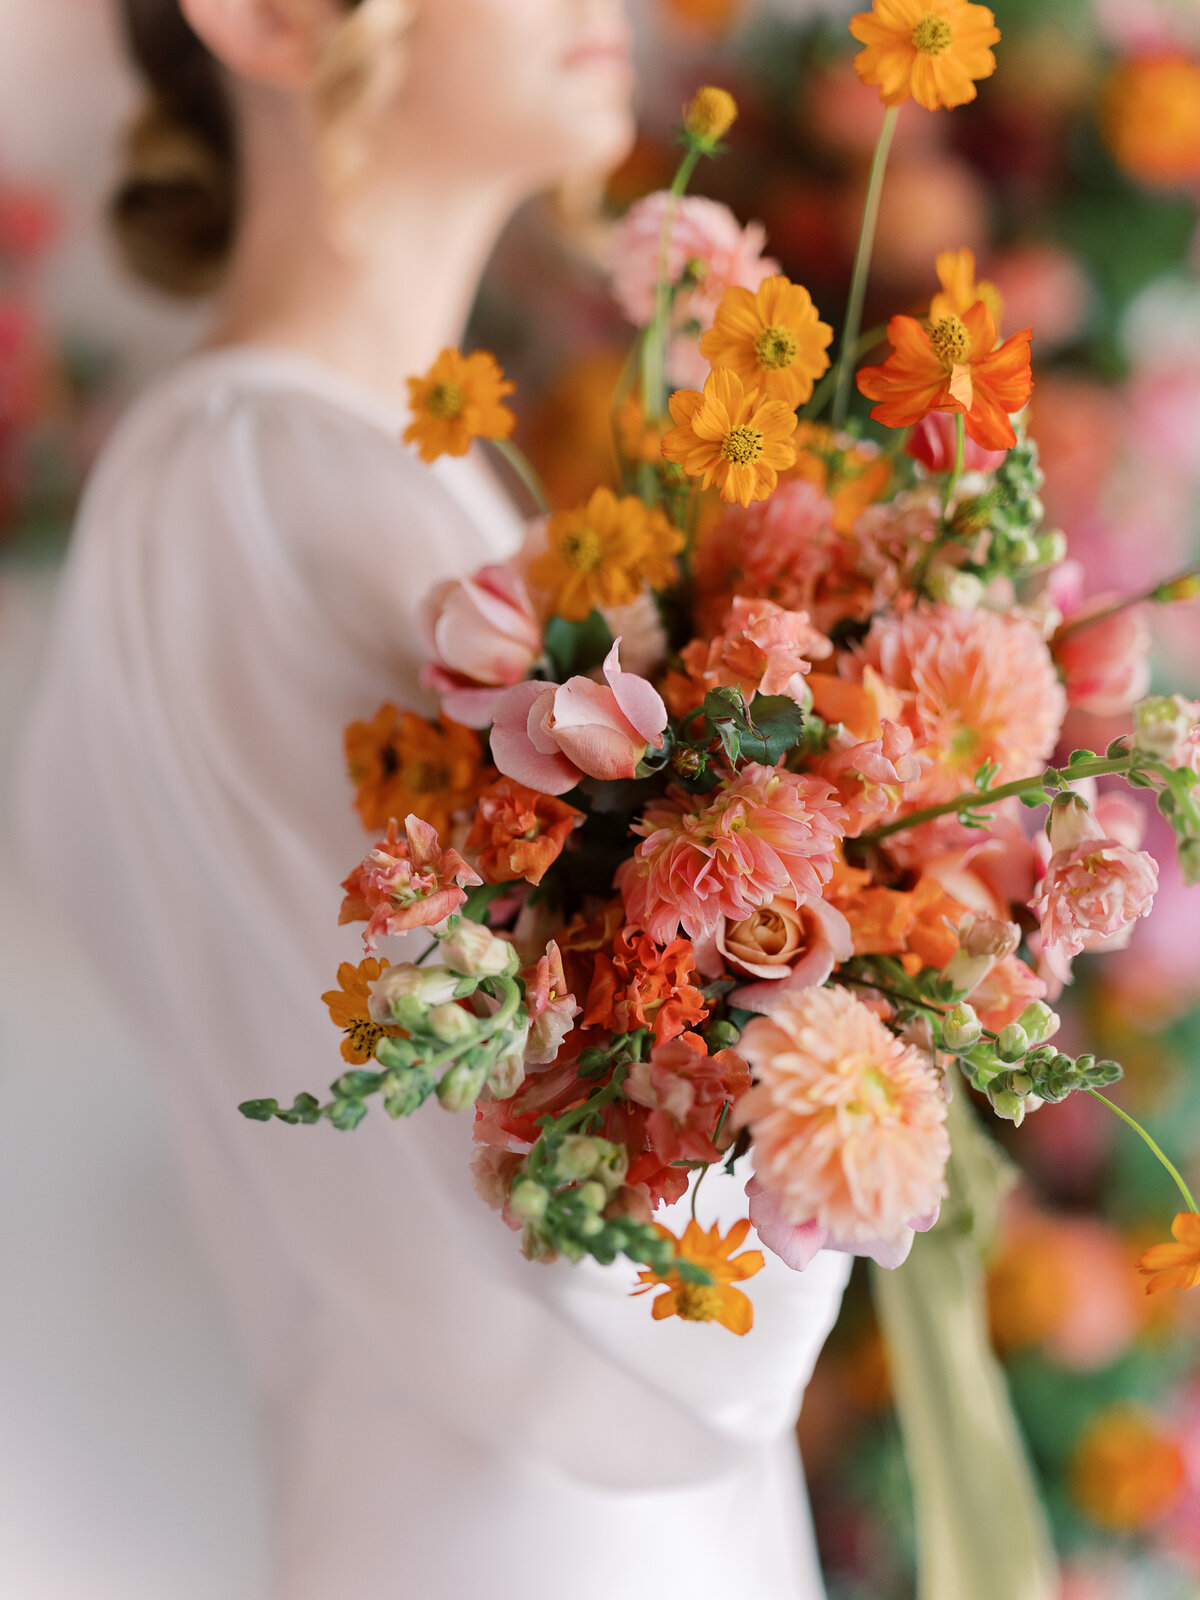 Sarah Rae Floral Designs Wedding Event Florist Flowers Kentucky Chic Whimsical Romantic Weddings38